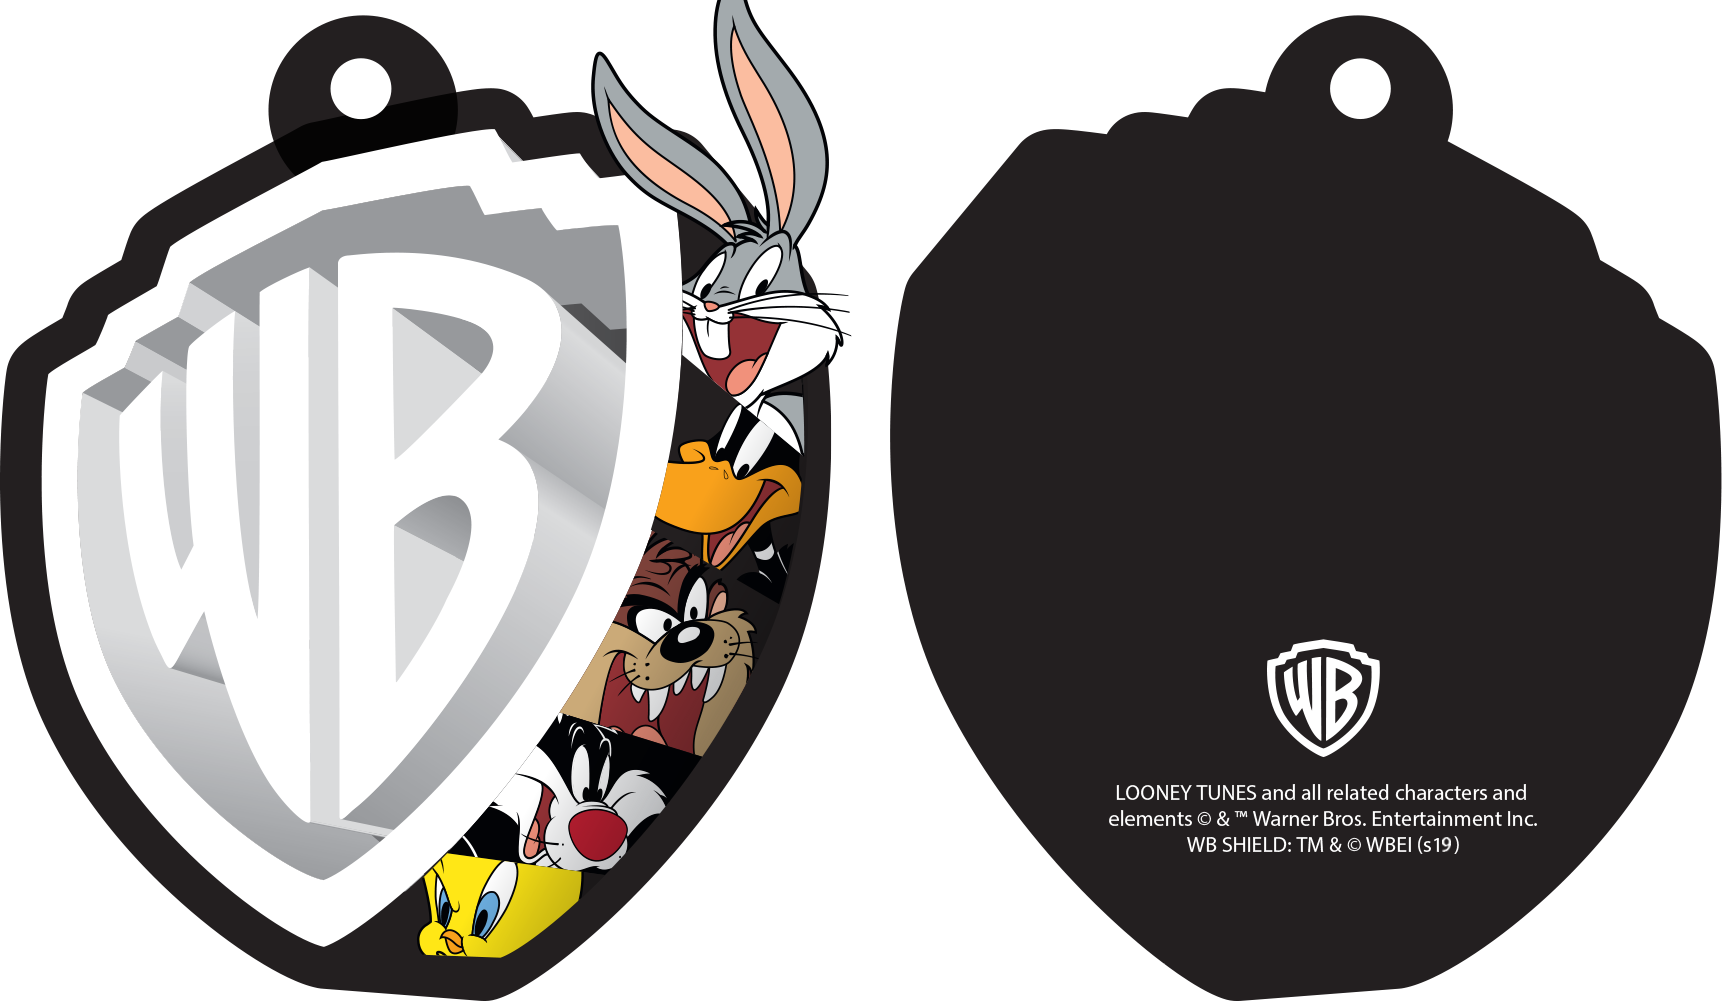 Looney Tunes Bugs Bunny Xmas HumBugs Official Men's Sweatshirt